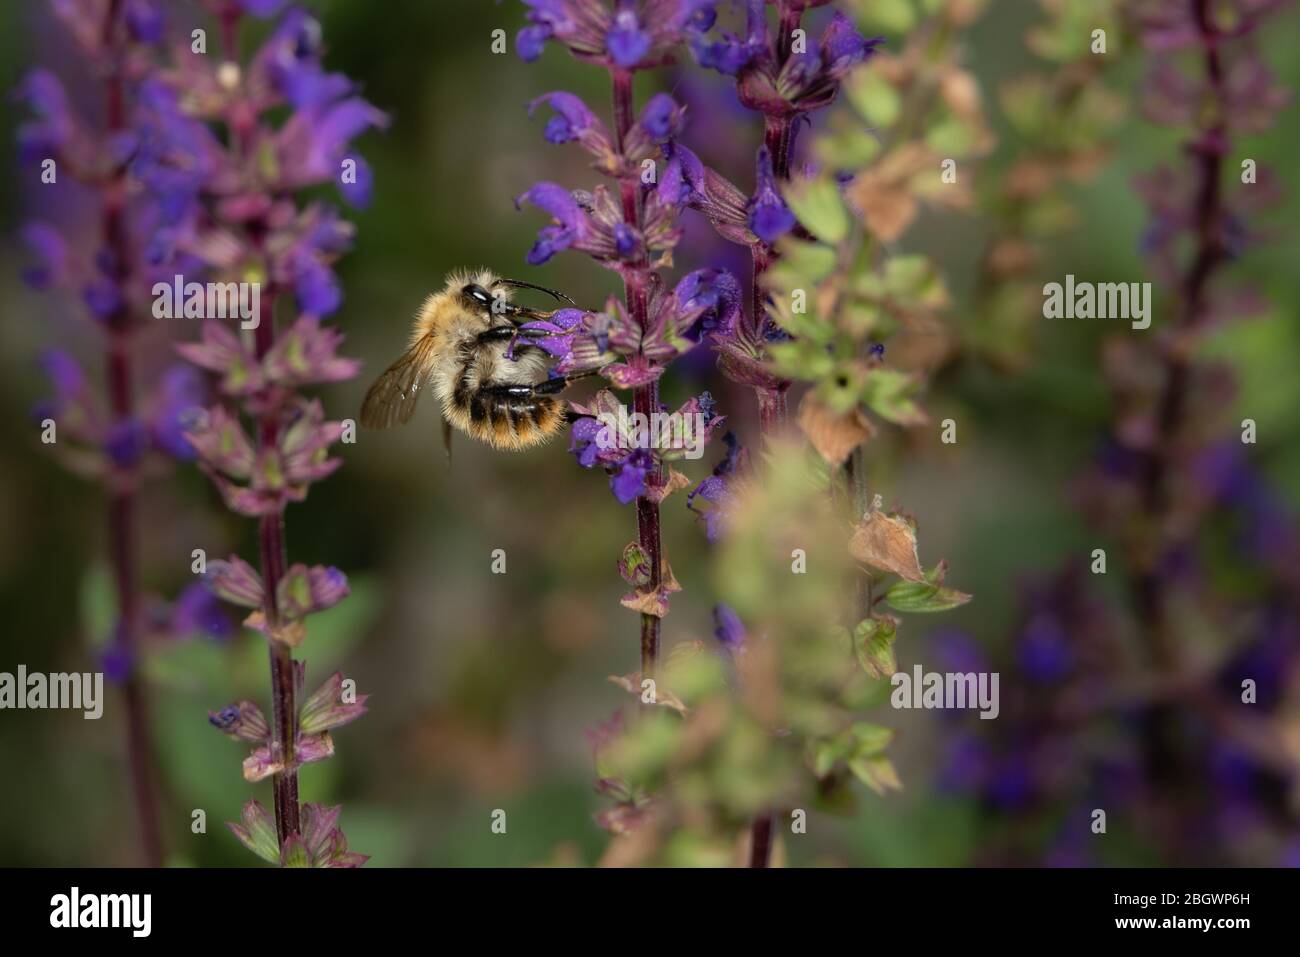 Bee on Salvia flowers iii. August, 2019 Stock Photo